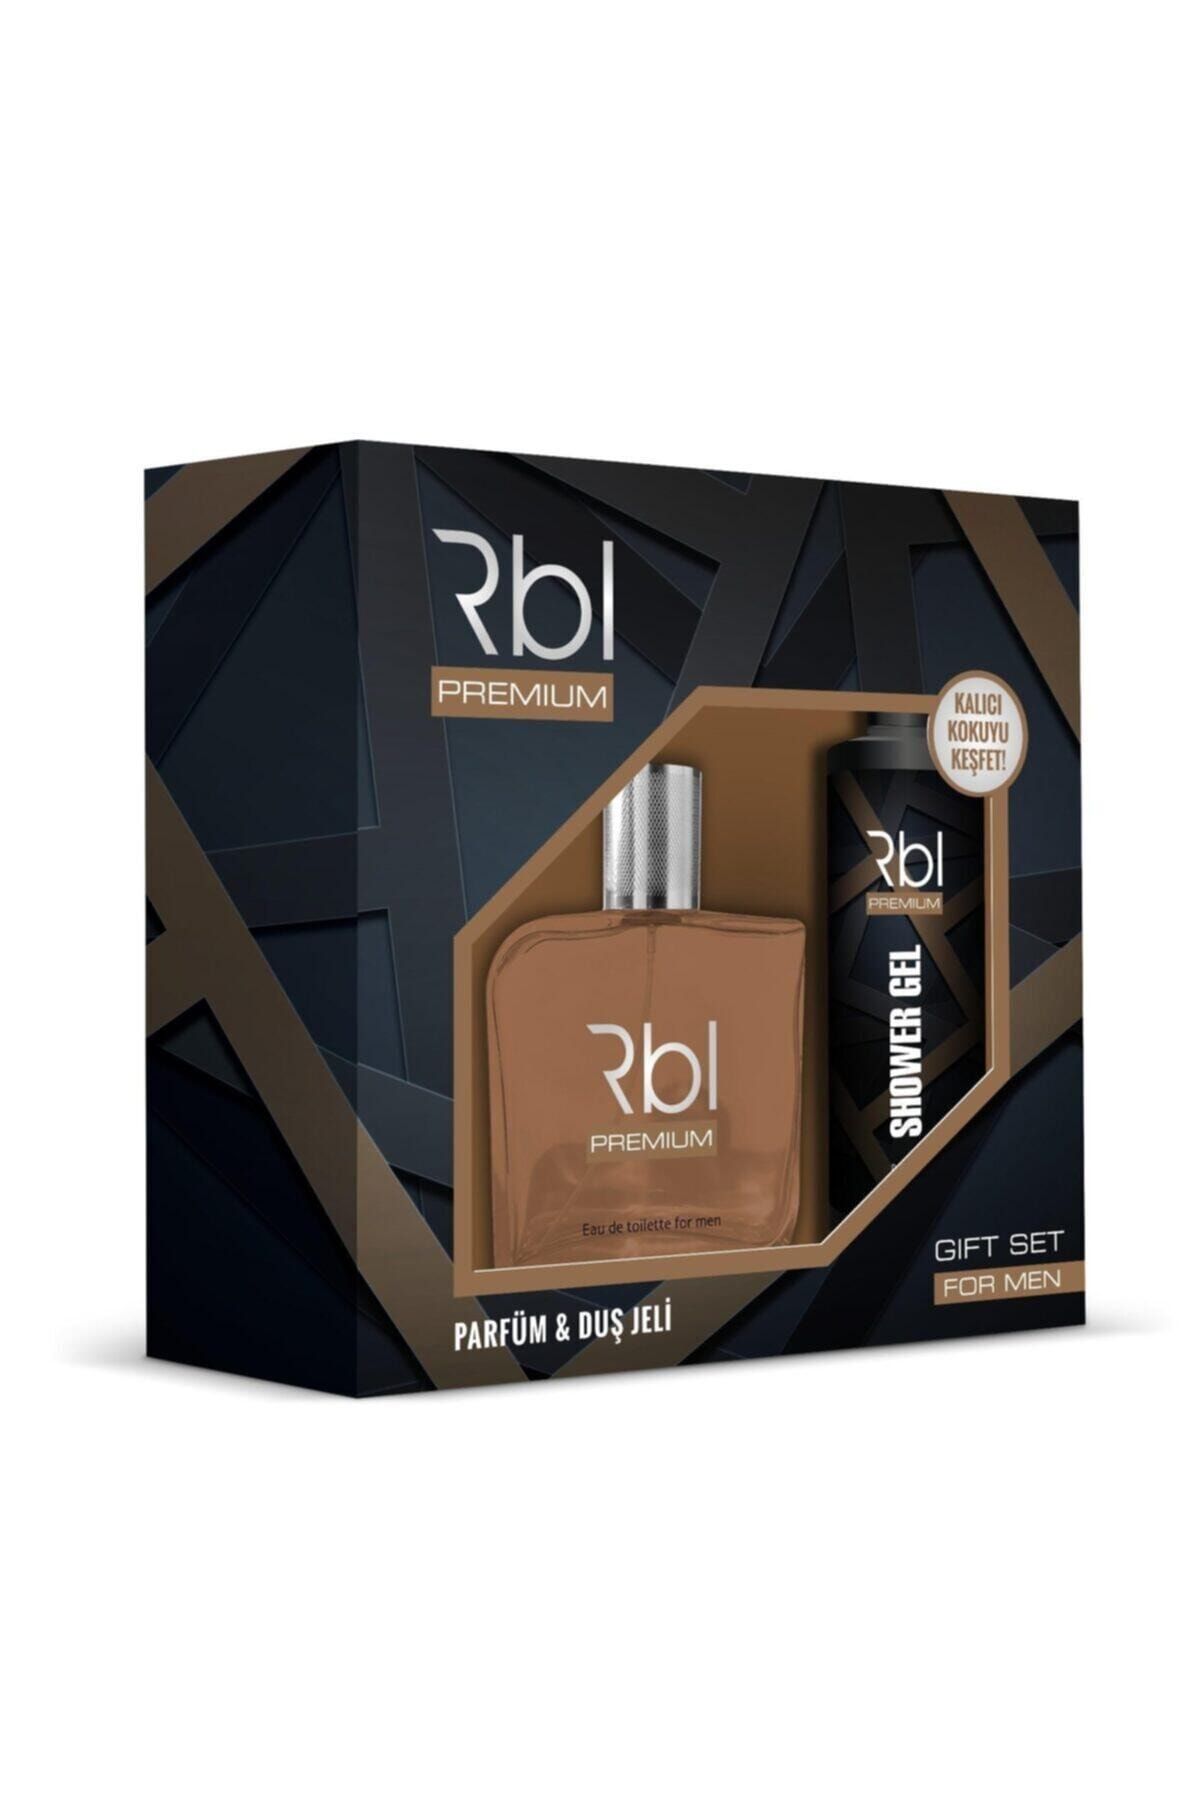 Rebul Premium Kofre Edt 200ml Unisex Parfüm + Duş Jeli Set